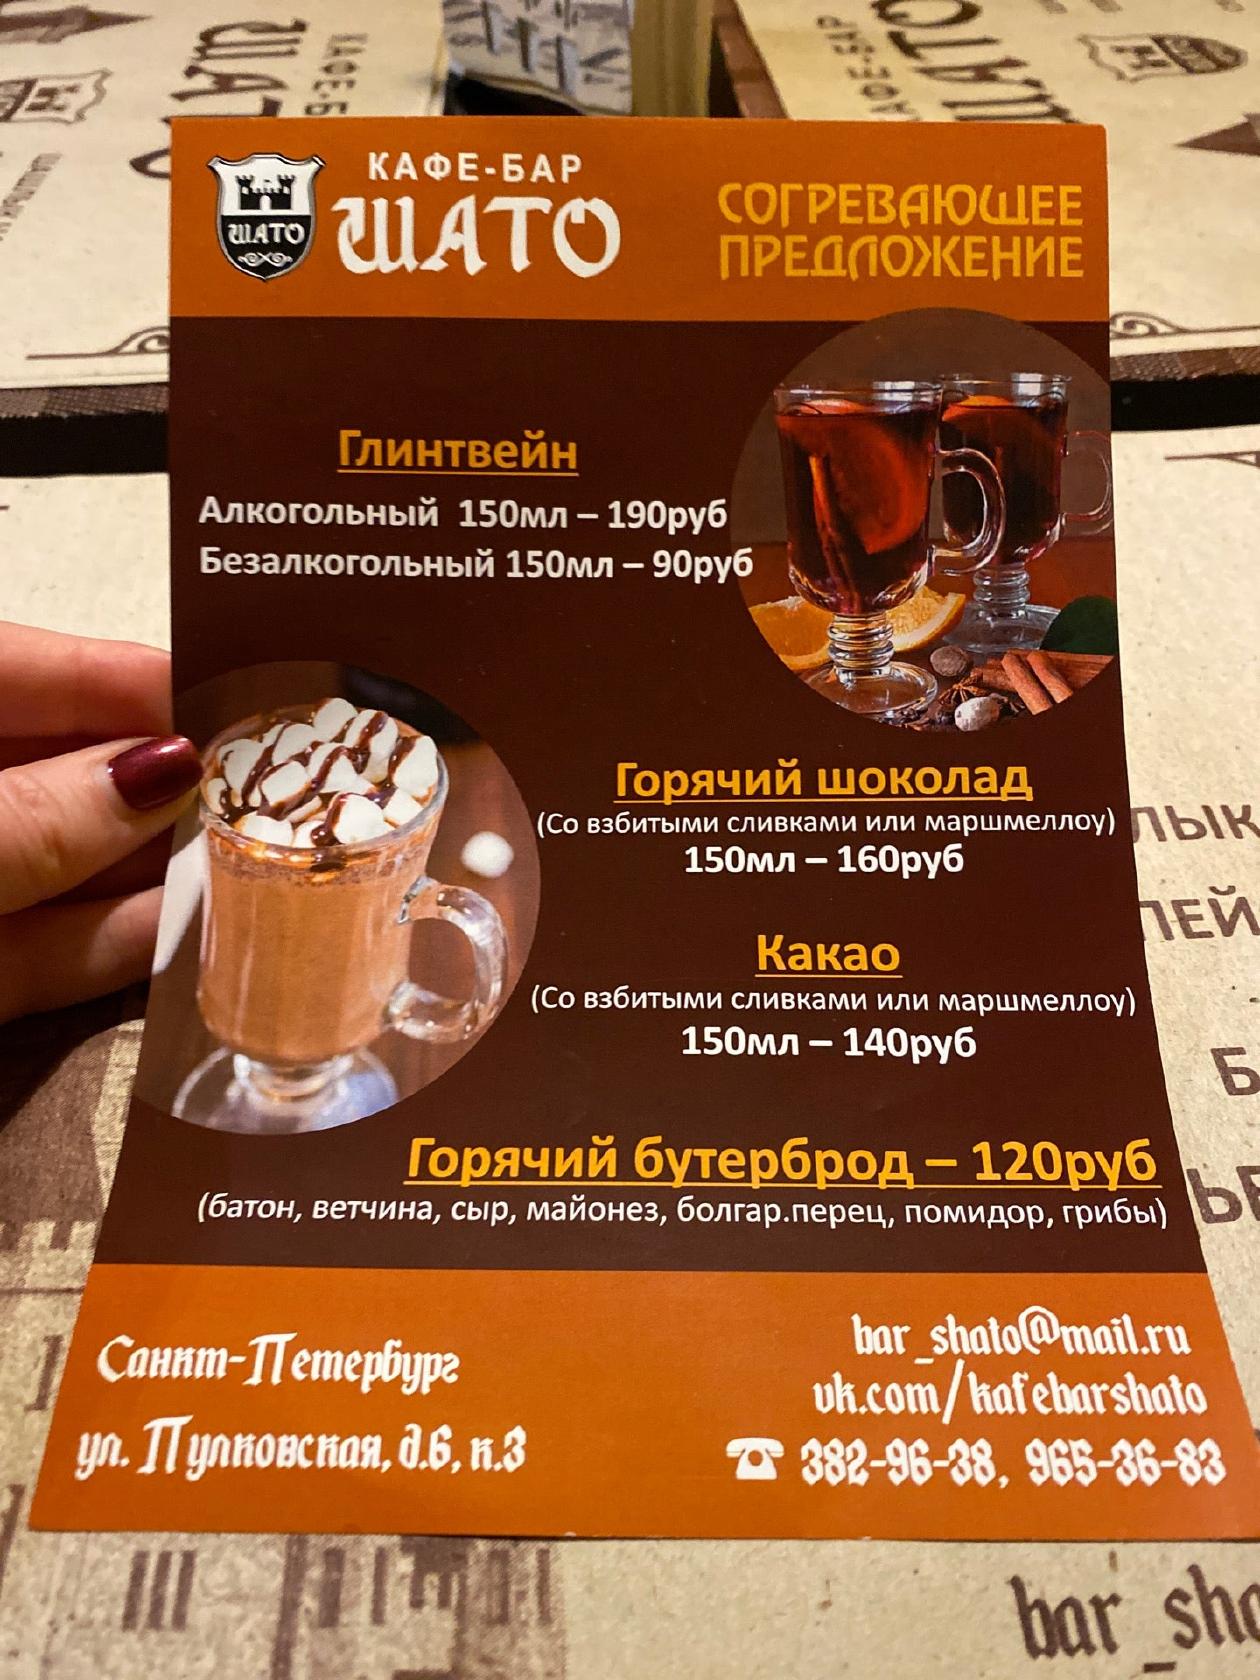 Сайт шато меню. Кафе Шато. Кафе Шато меню. Кафе Шато на Пулковской в СПБ. Шато 55 меню.